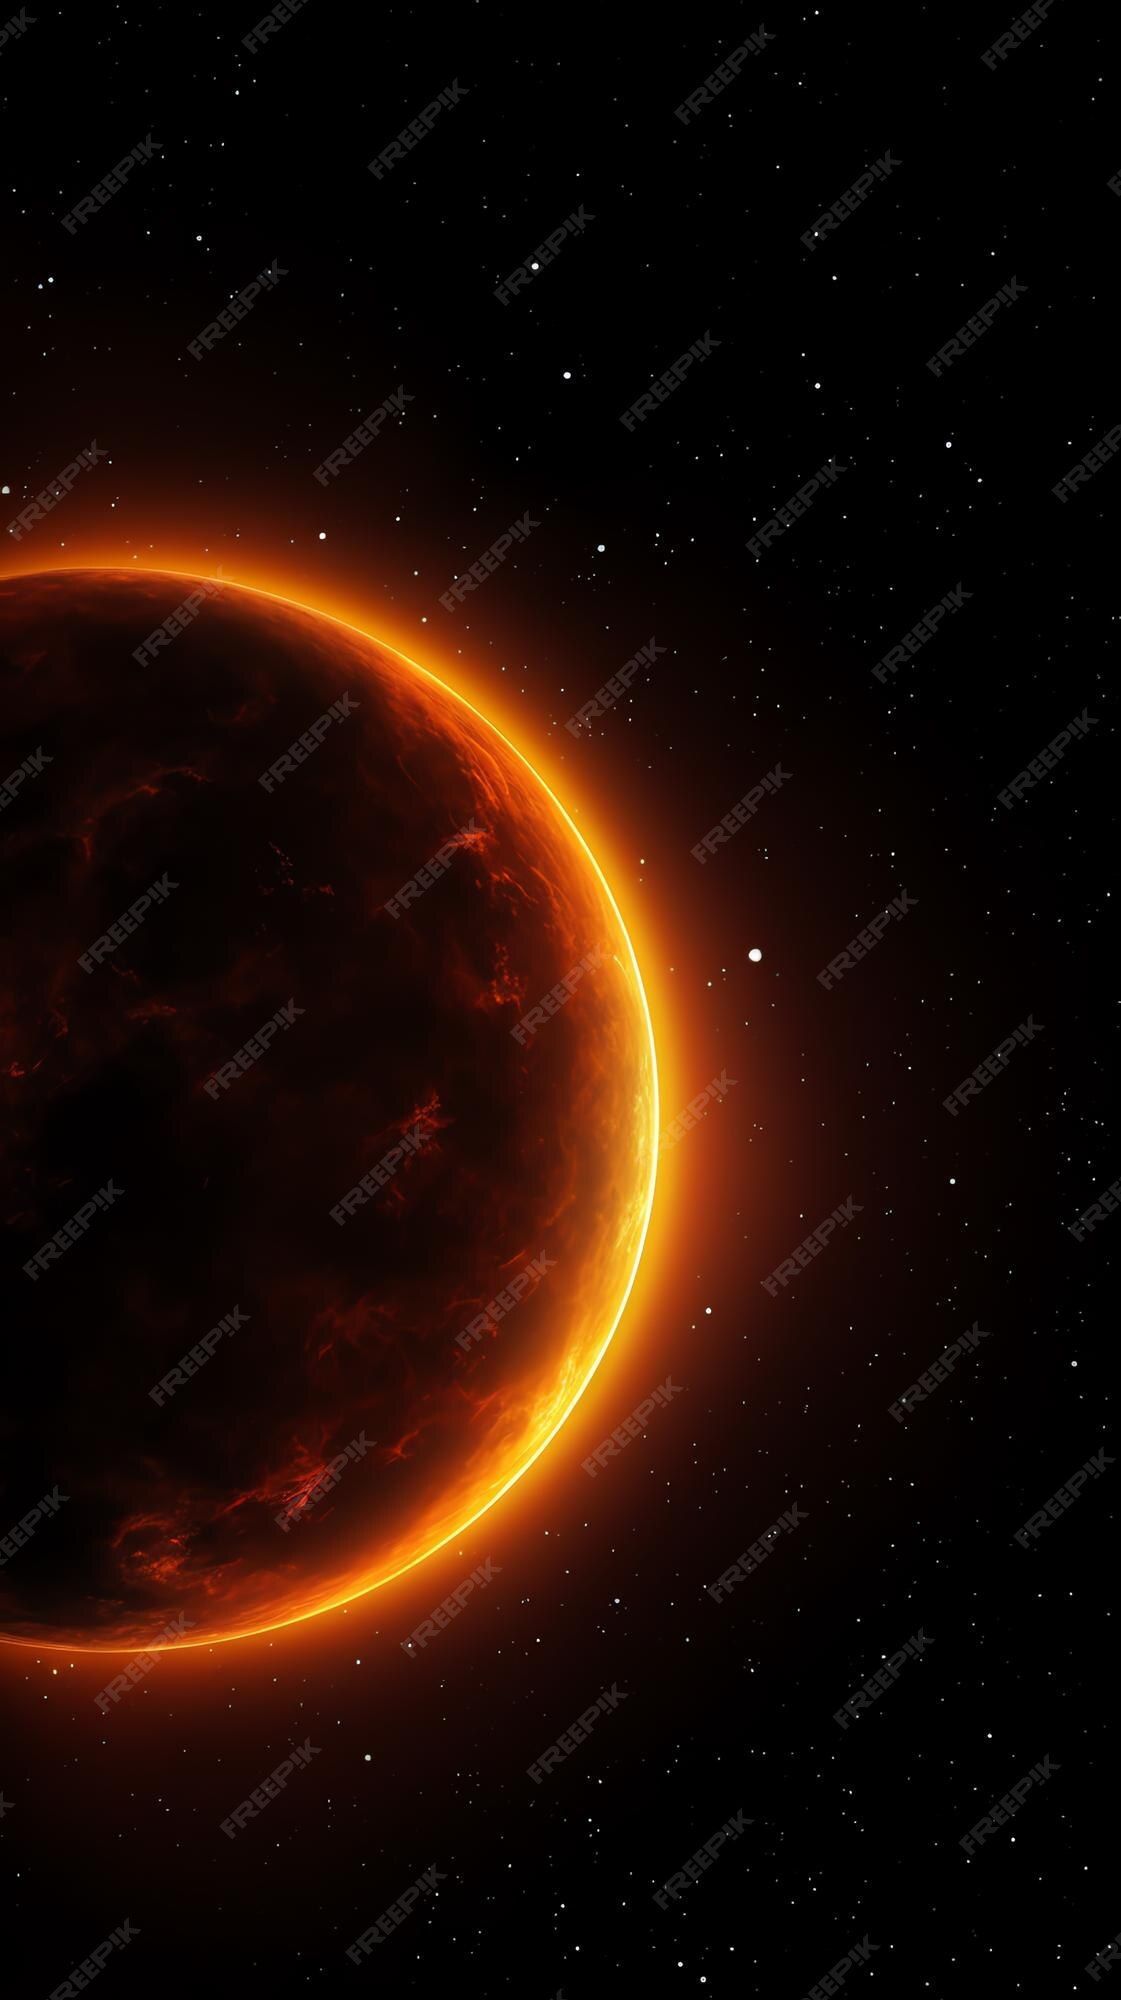 Eclipse Background Image